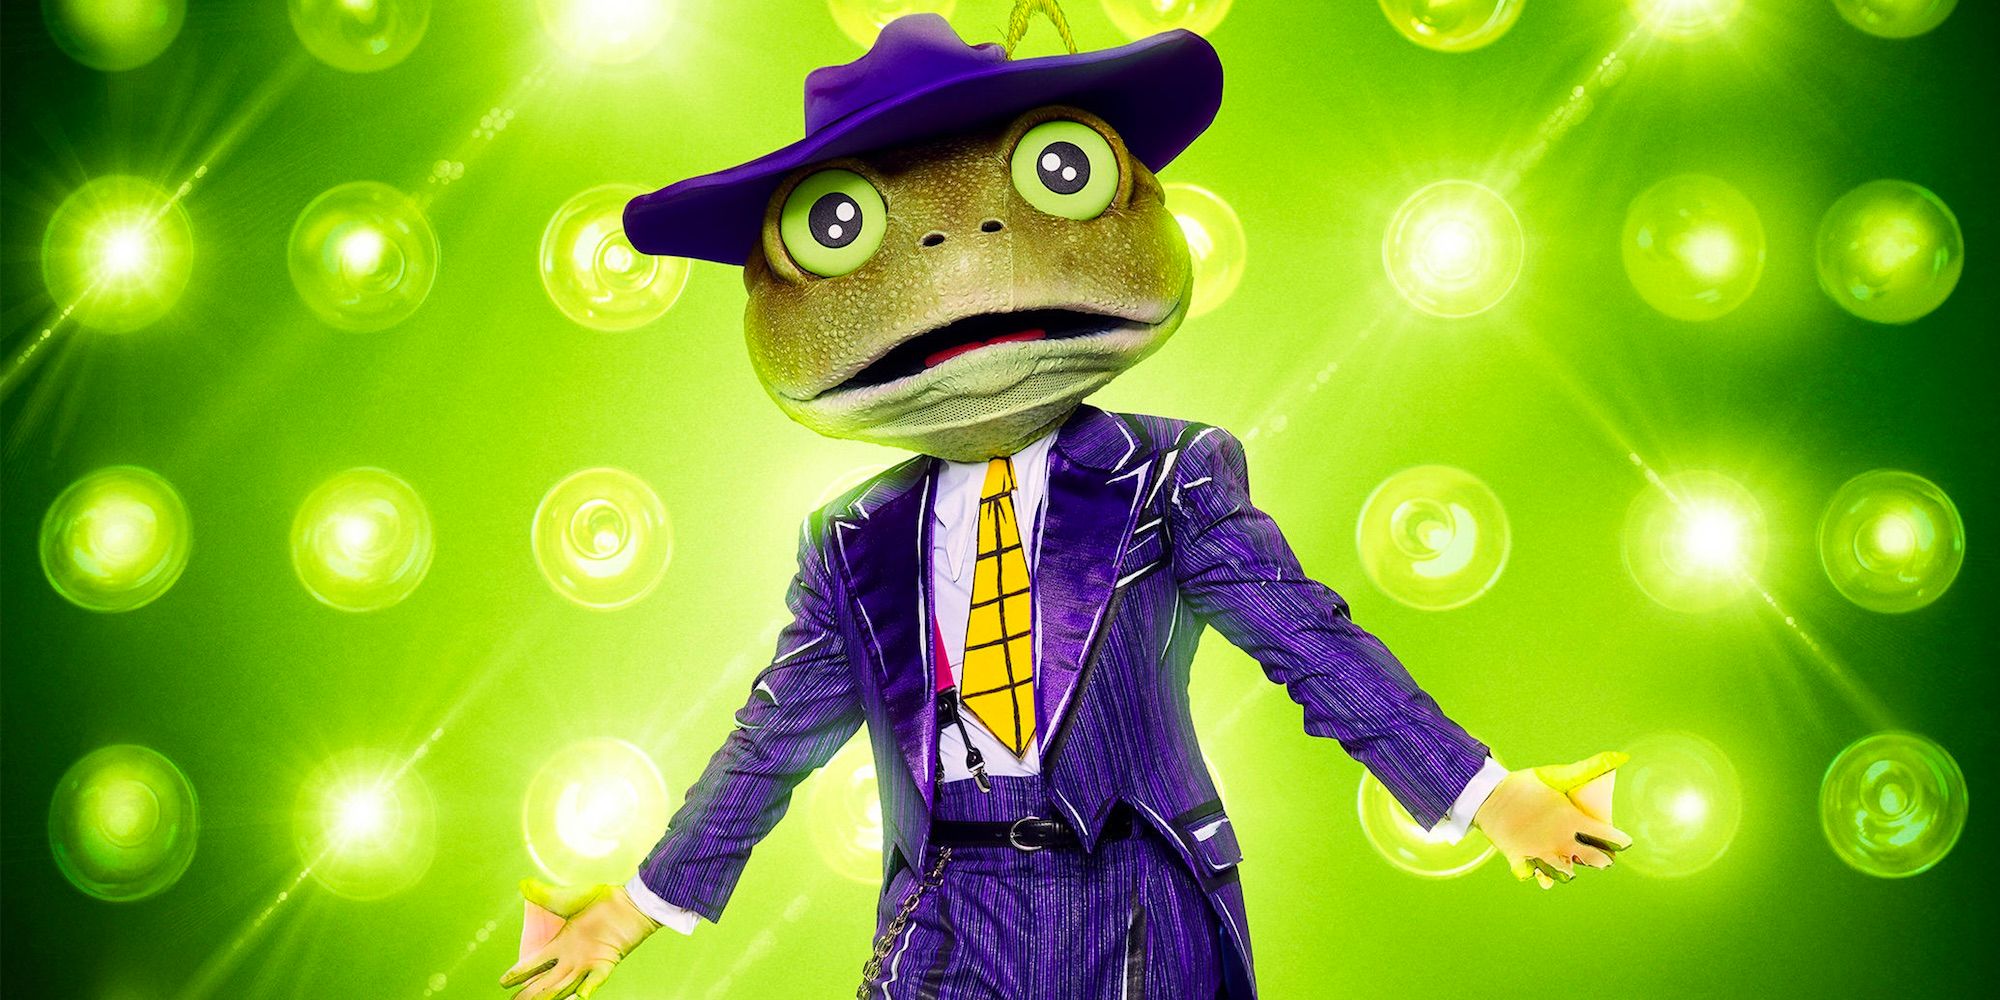 Masked singer season 3 Frog